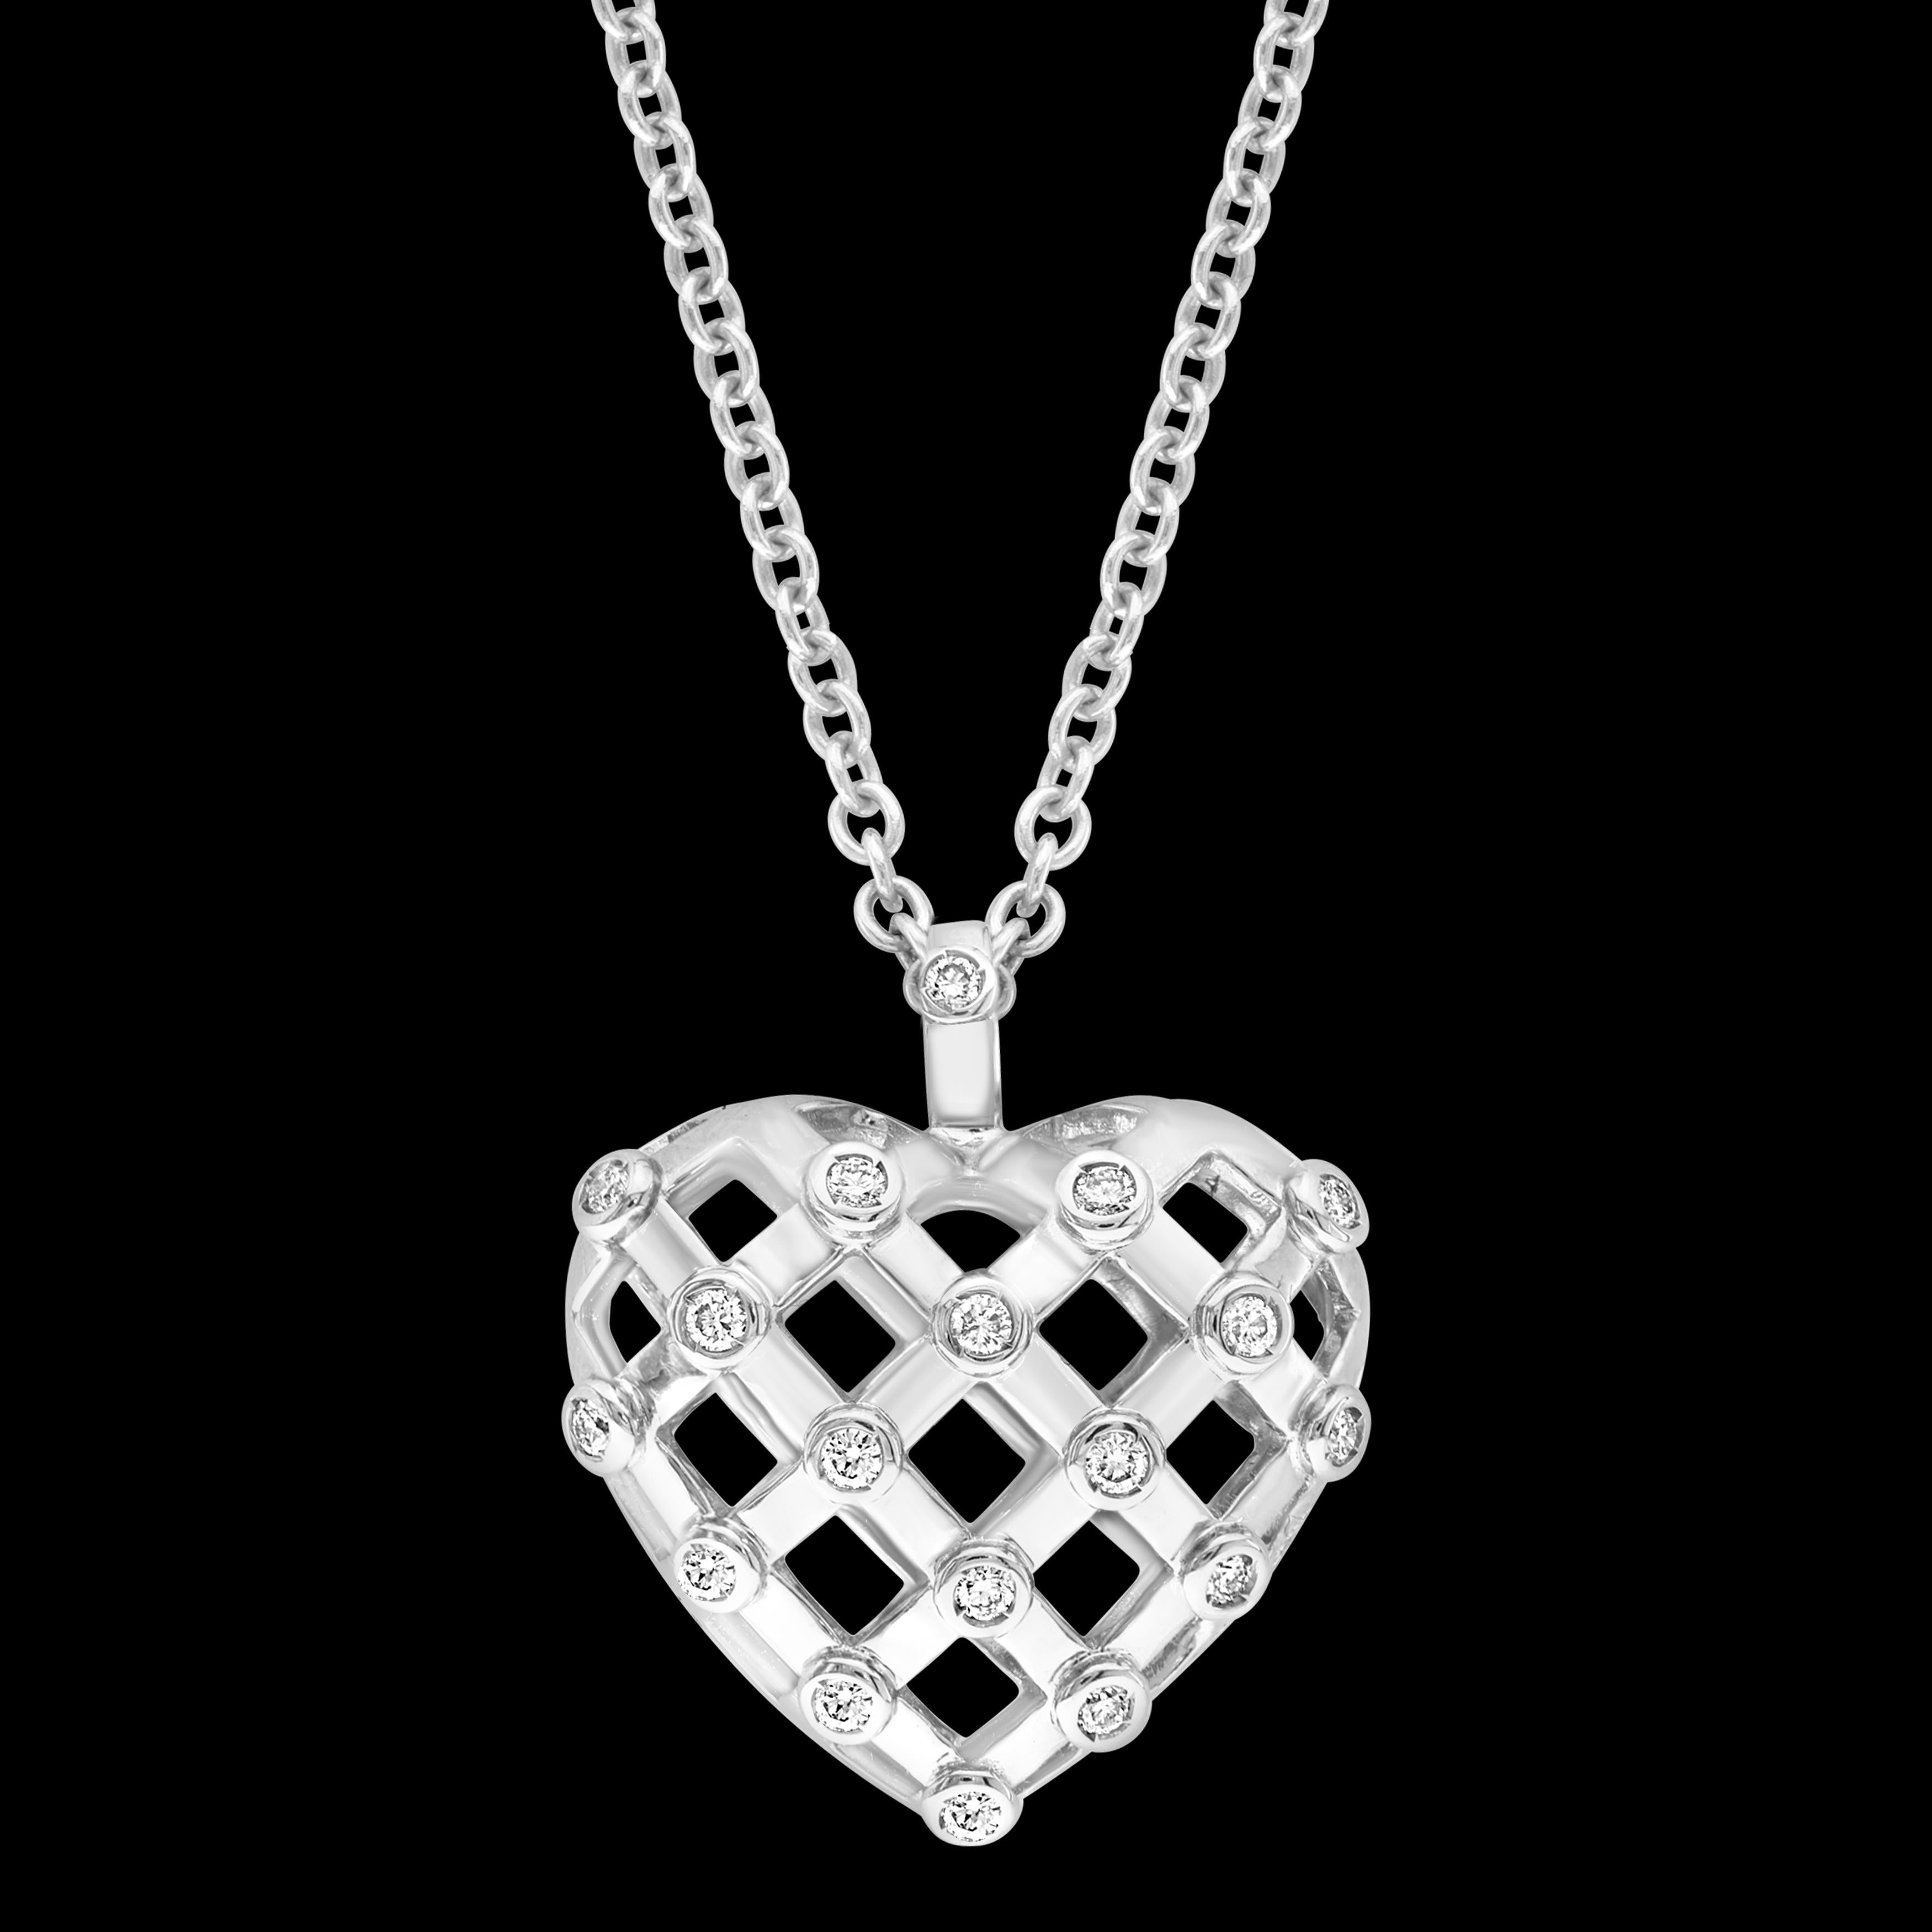 Round Cut Tiffany & CO Heart Diamond Pendant Necklace 18K White Gold 0.50 CT 31